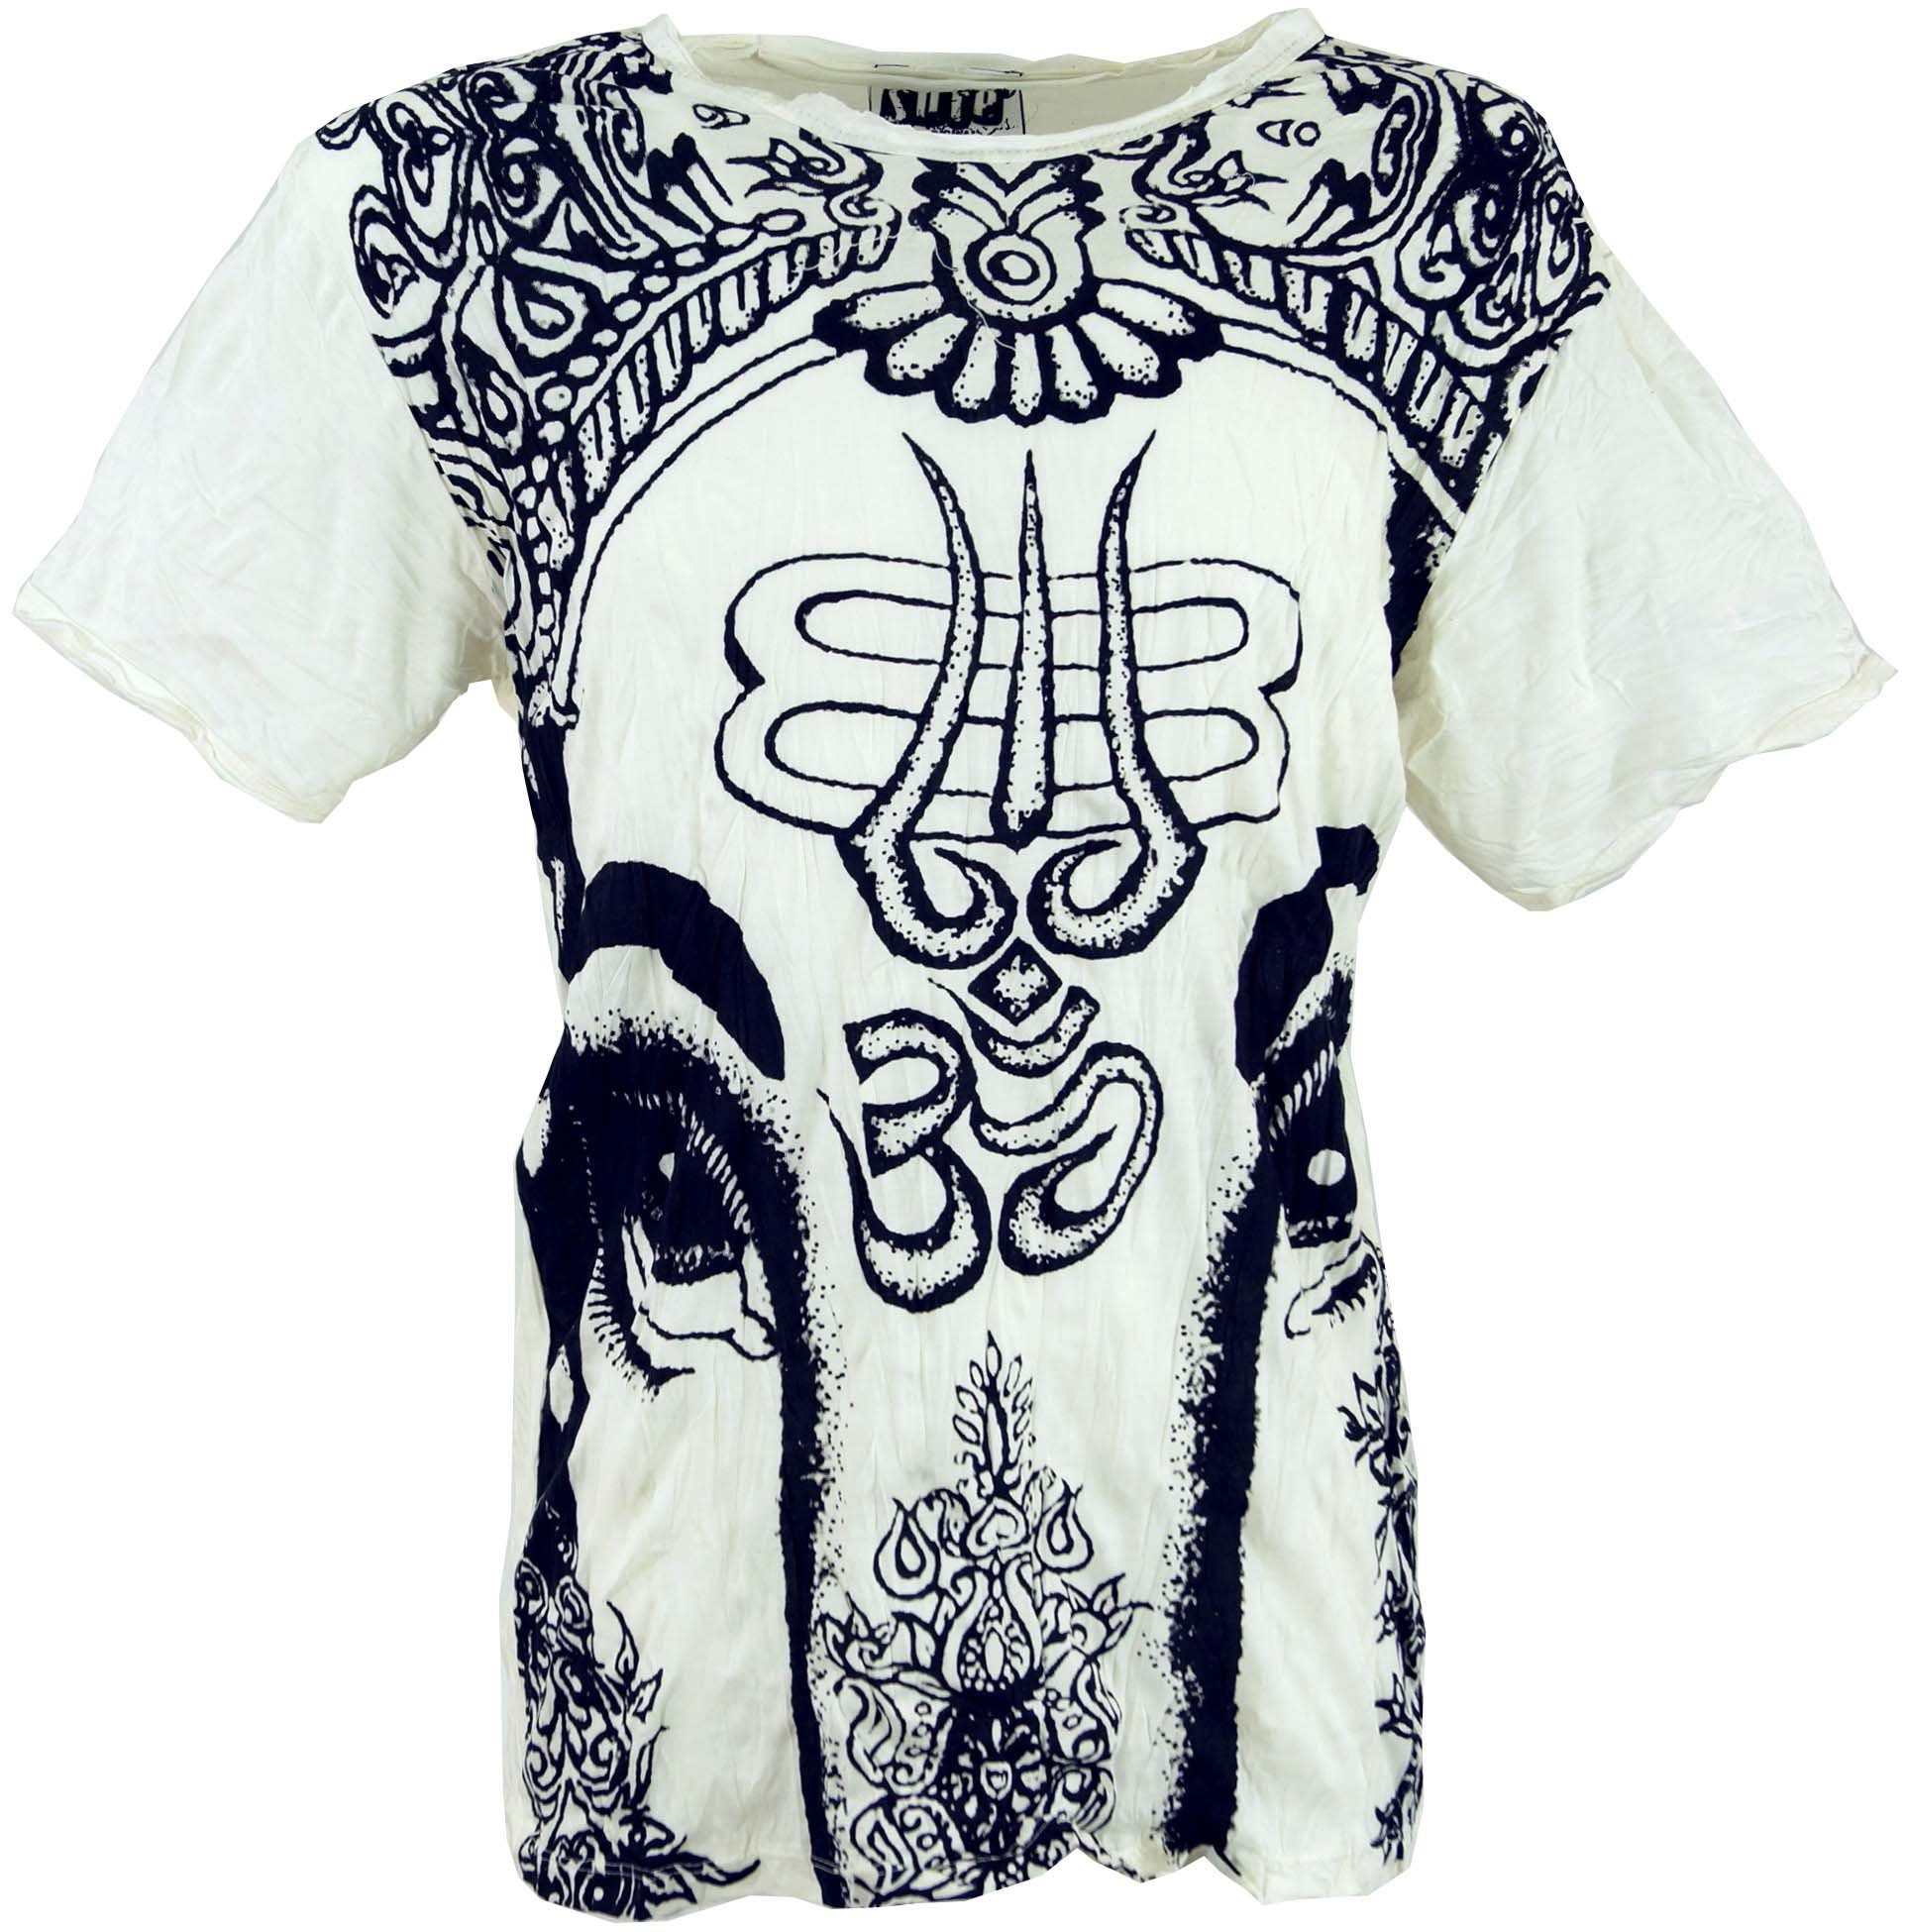 Ganesh T-Shirt Bekleidung Sure - Goa alternative weiß Style, T-Shirt Festival, Guru-Shop